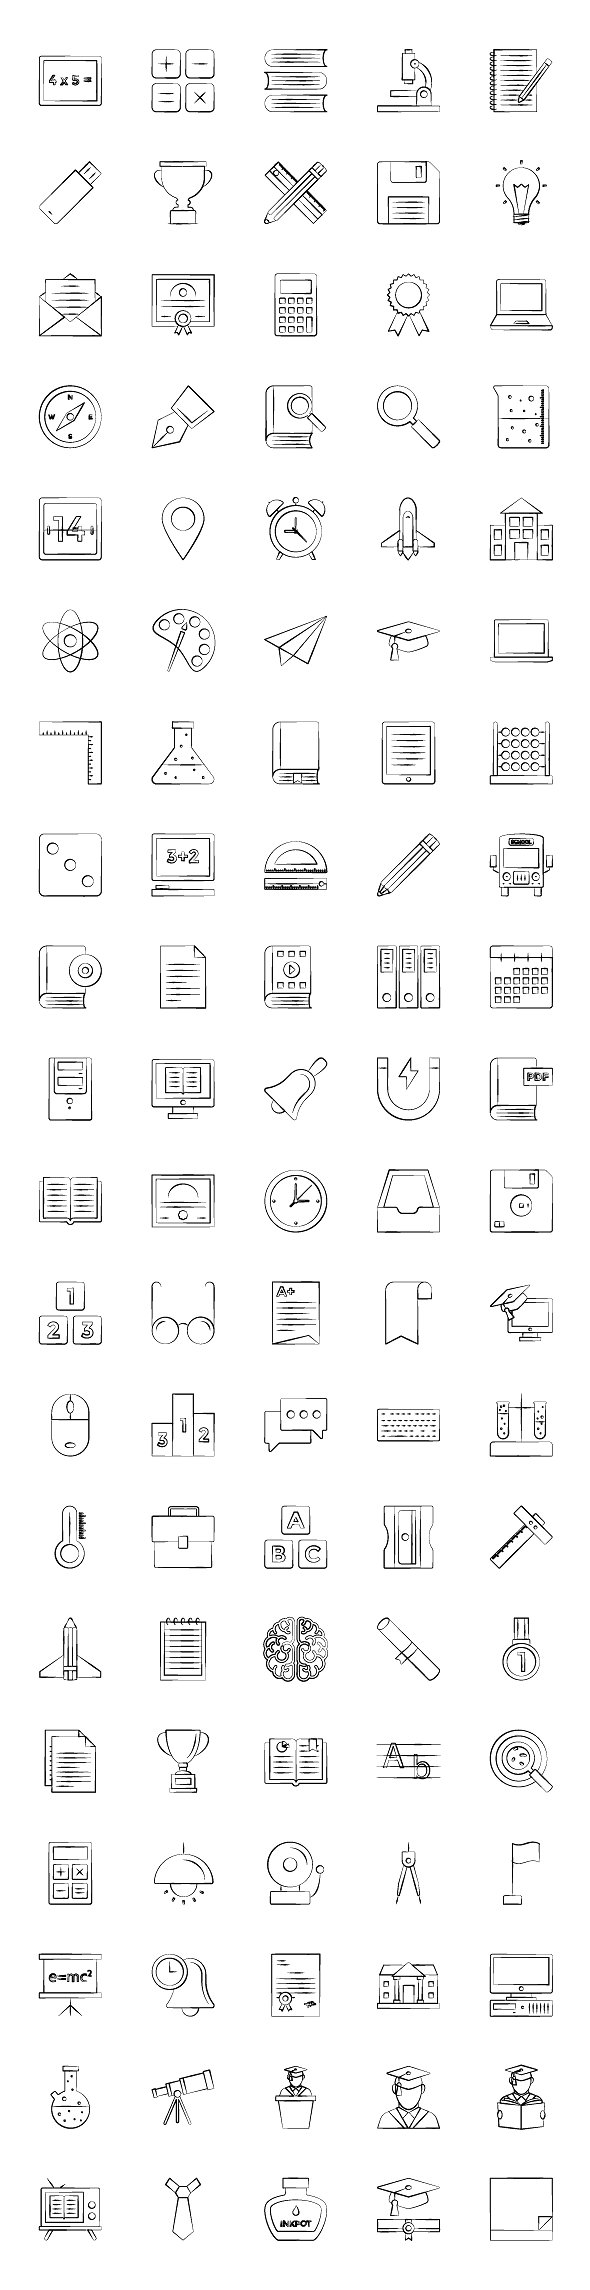 1200枚教育主题图标 Educational 1200 Icons Bundle Pack插图(10)